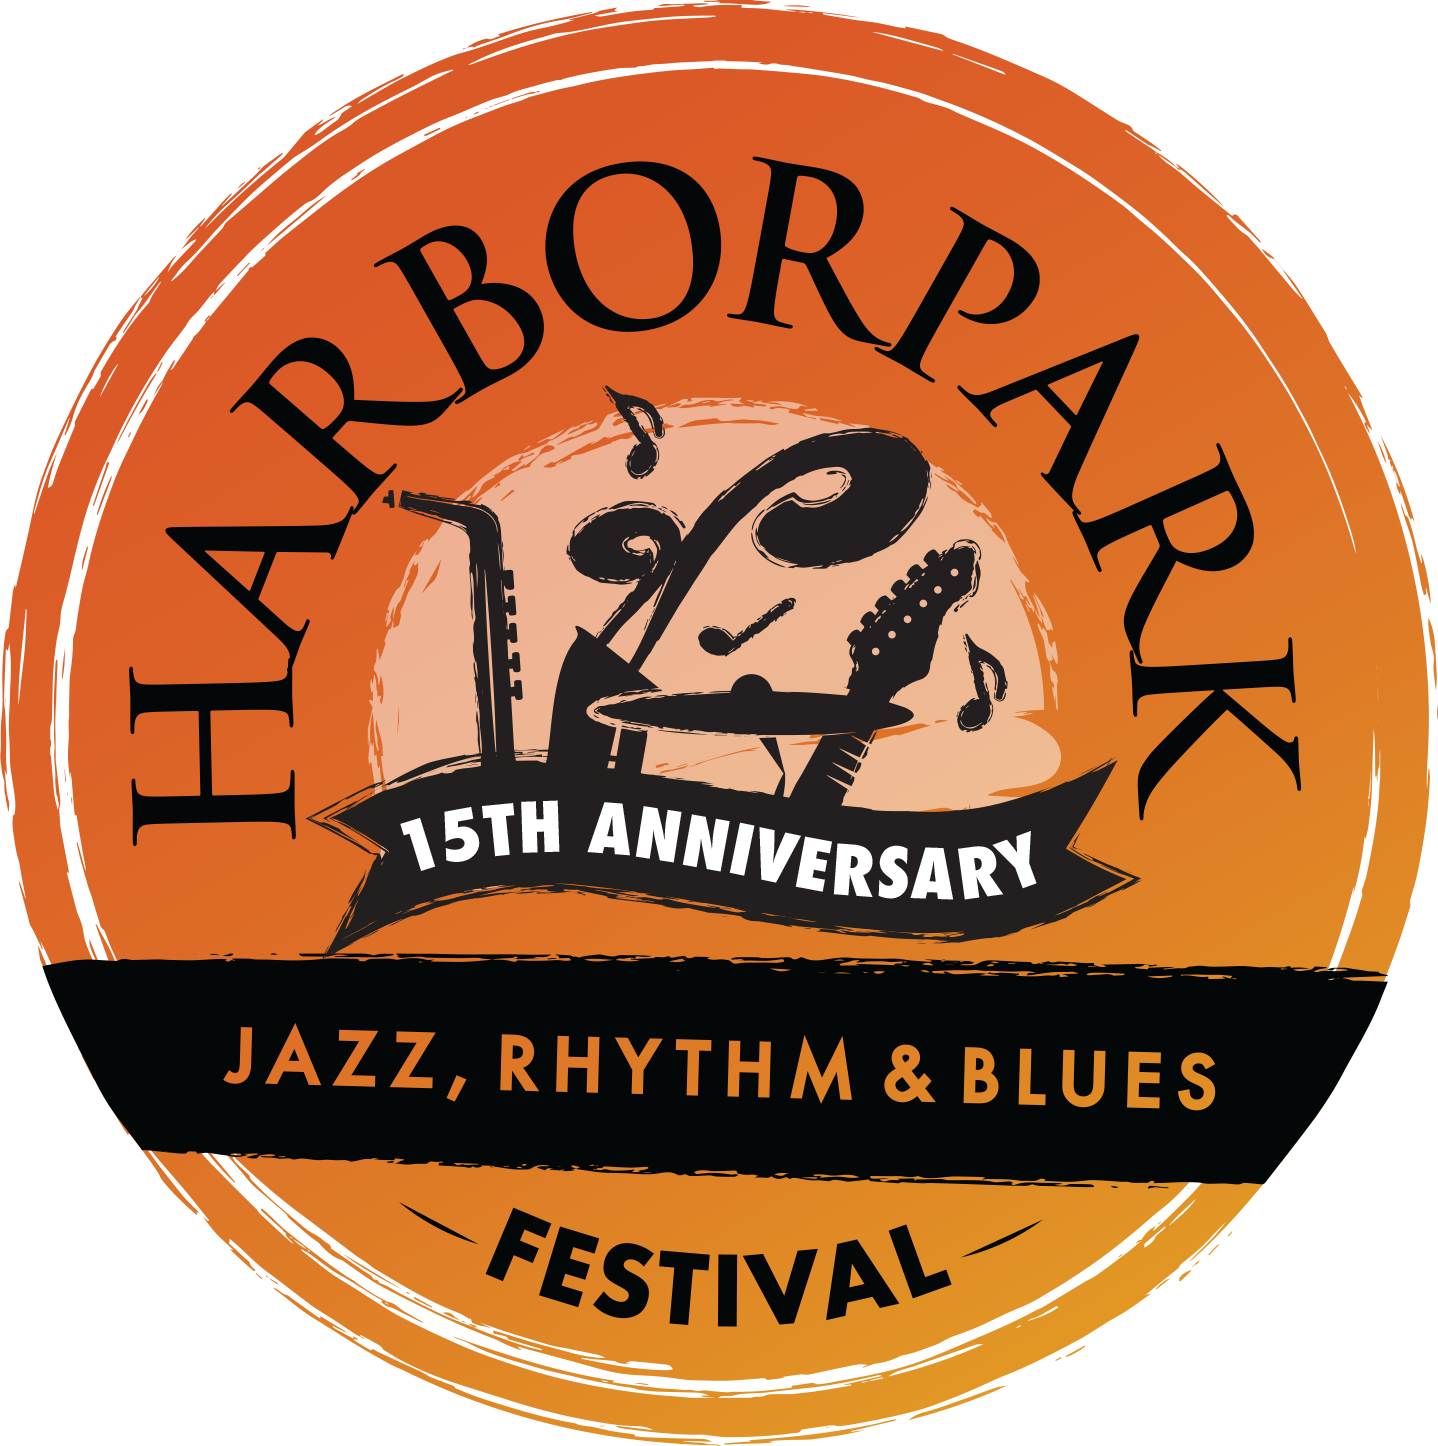 Harborpark Jazz, Rhythm &amp; Blues Festival